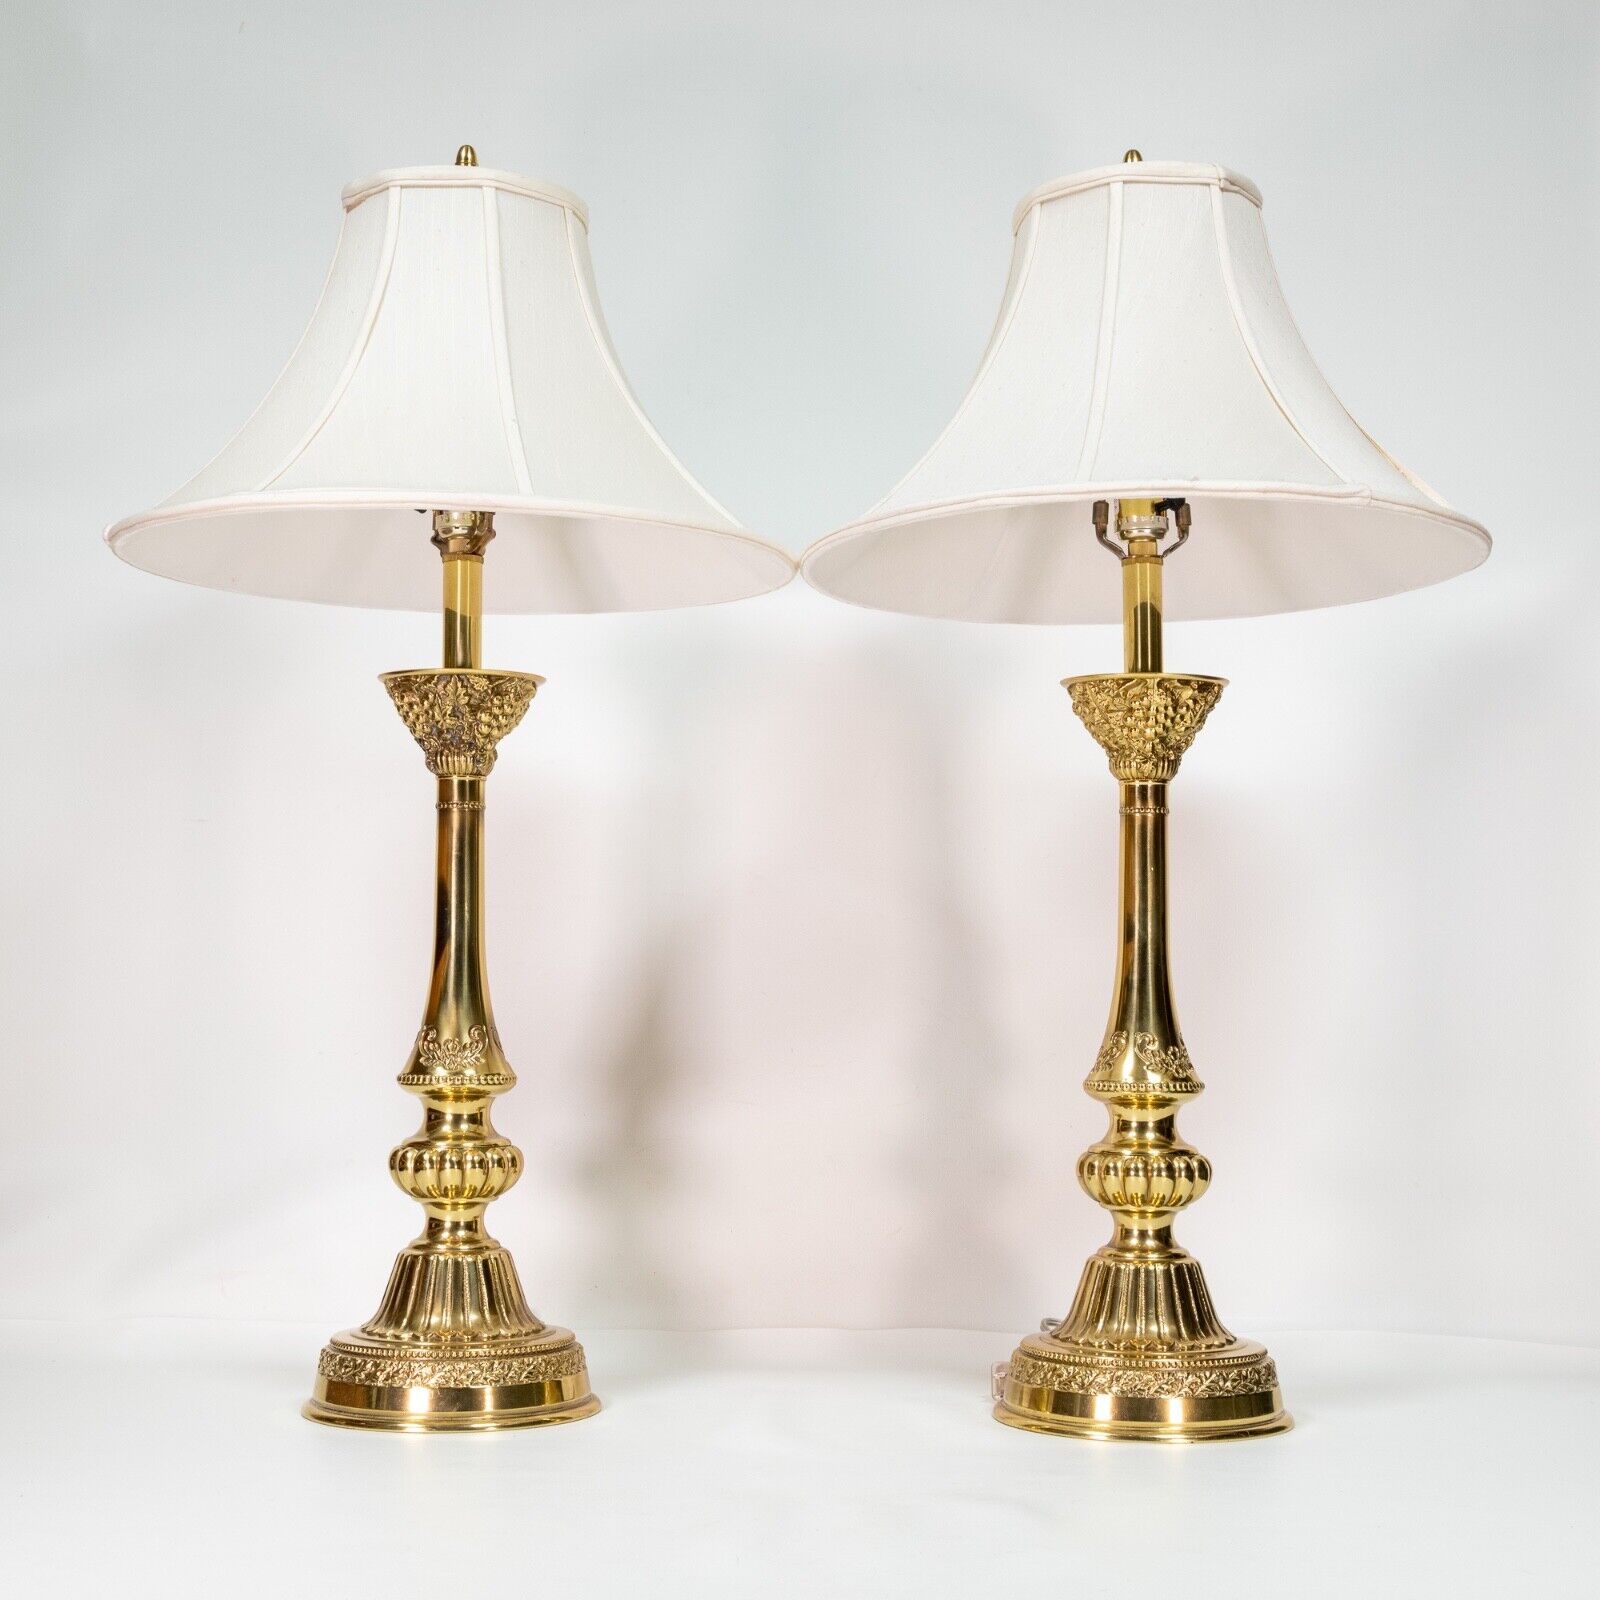 Fantastic Pair of 1960s Stiffel Monumental Tommi Parzinger Lamps - Heavy Brass